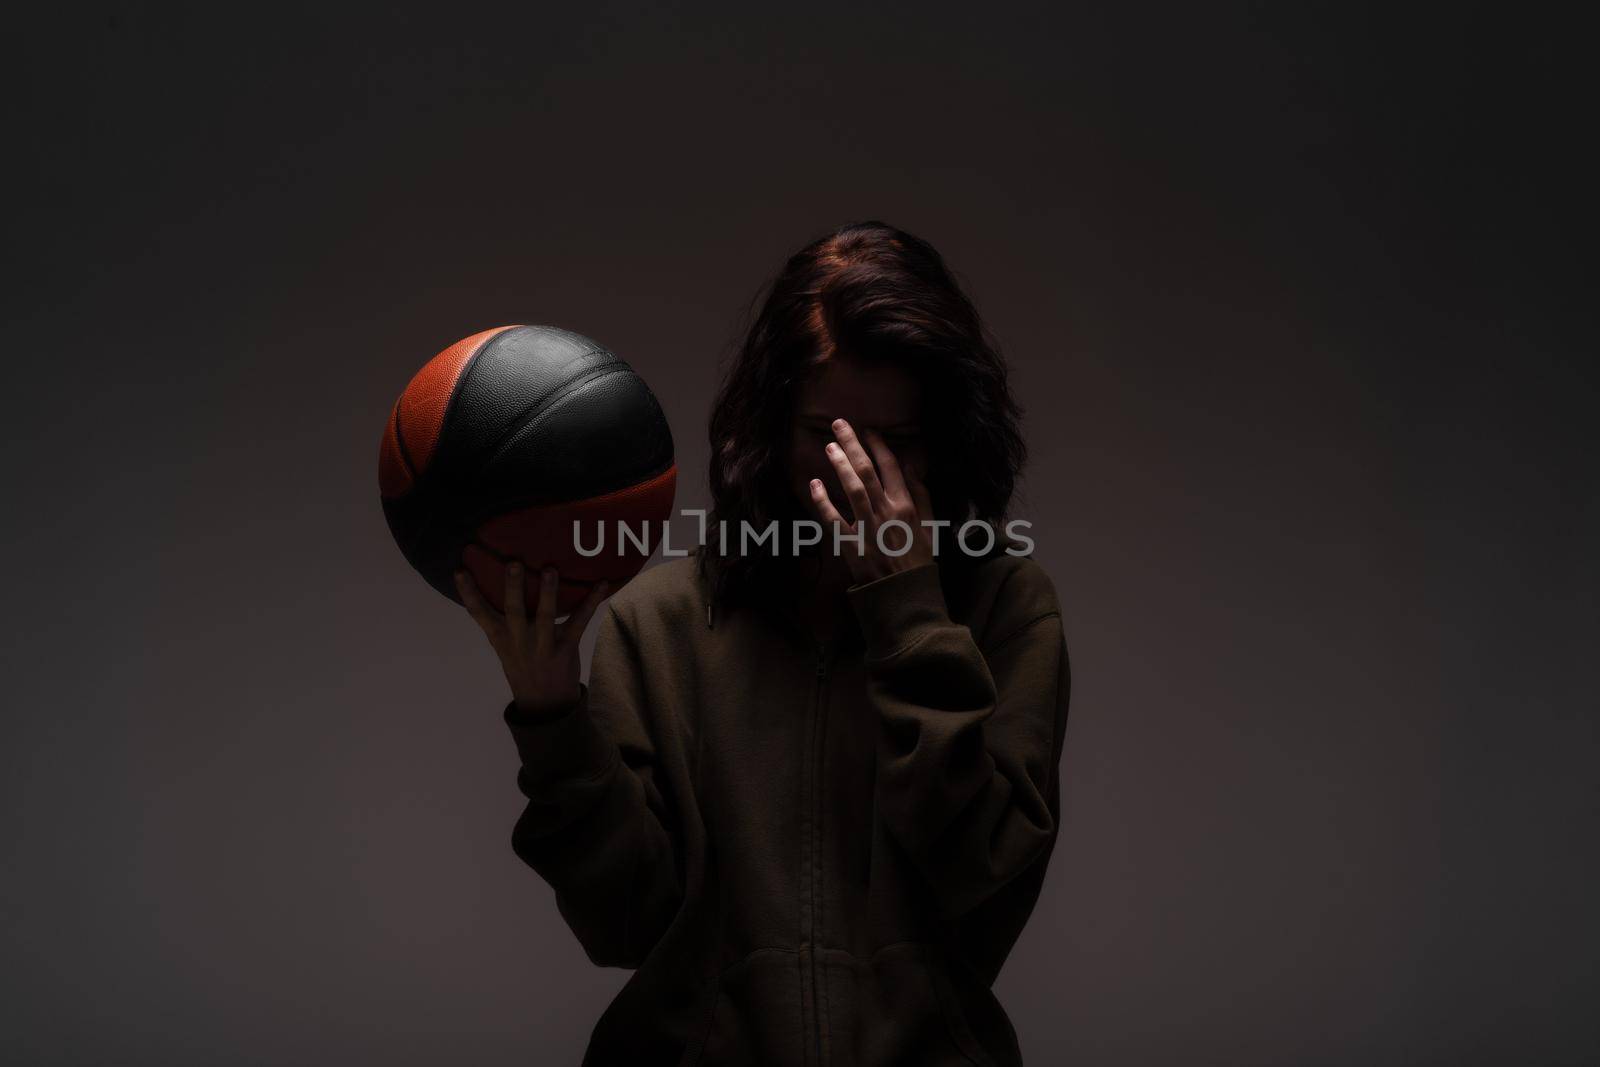 Teenage girl with basketball. Silhouette studio portrait on dark background.. by kokimk